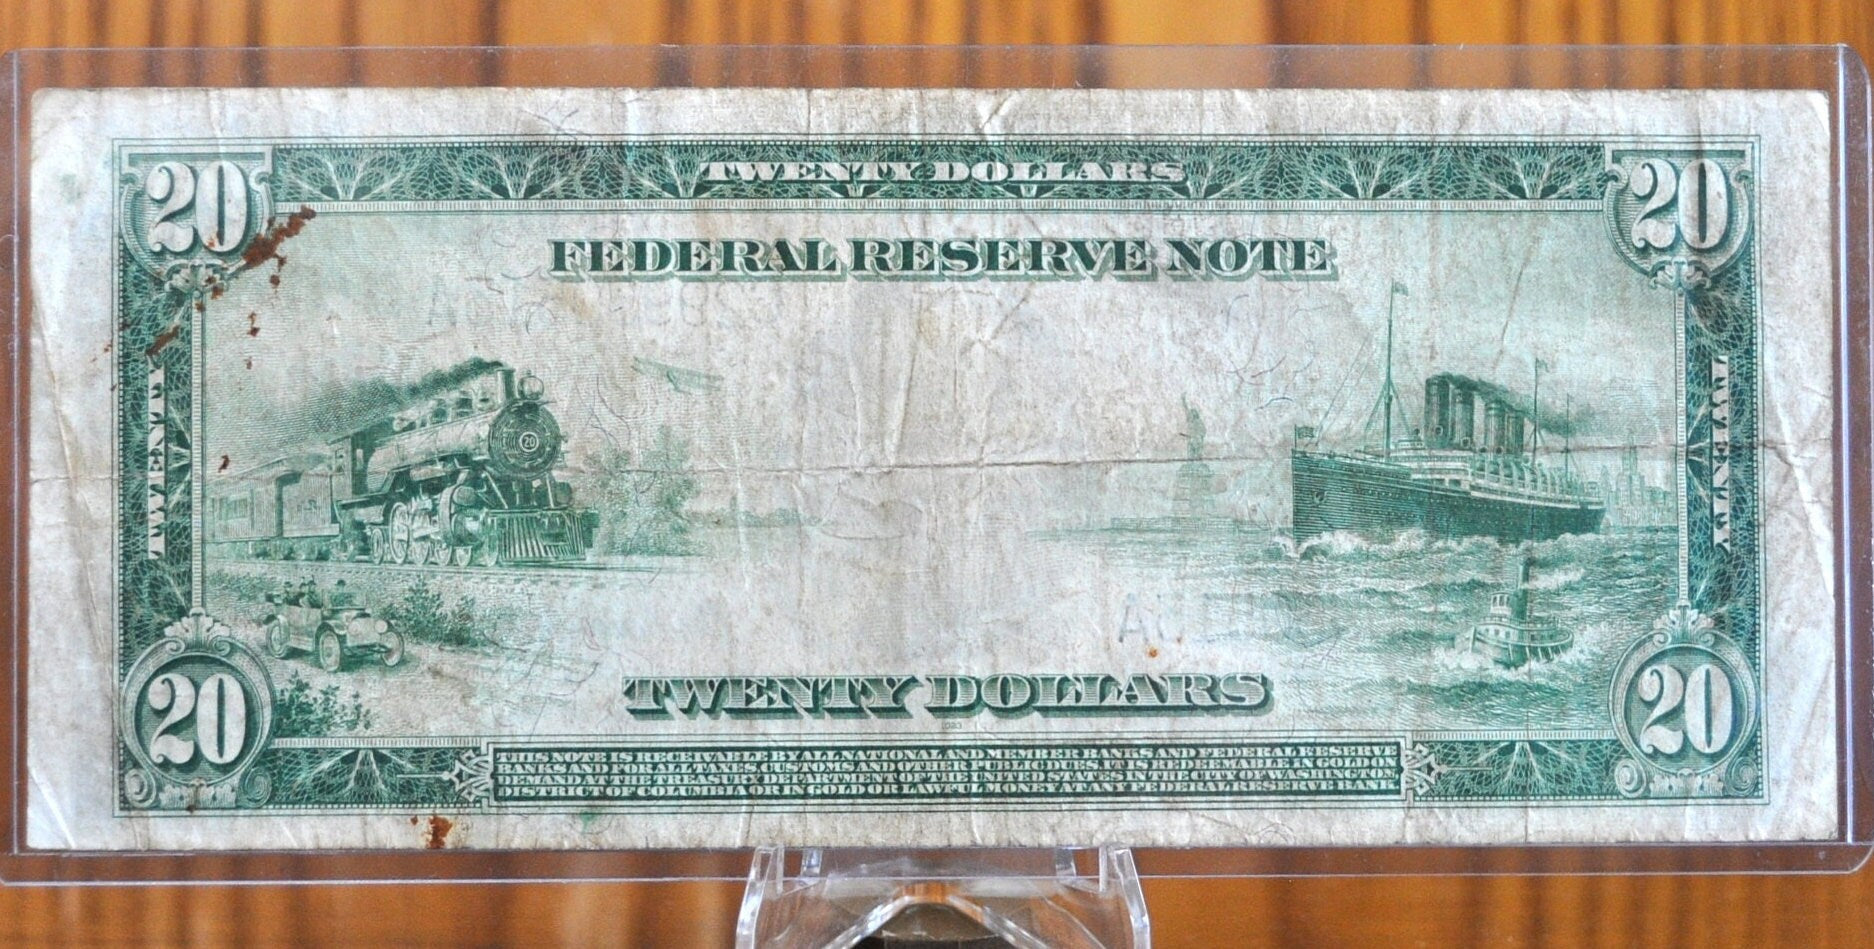 1914 20 Dollar Federal Reserve Note Large Size Fr#975 - VF (Very Fine), Nice Note - Philadelphia 1914 Twenty Dollar Bill 1914 Fr975 / Fr.975